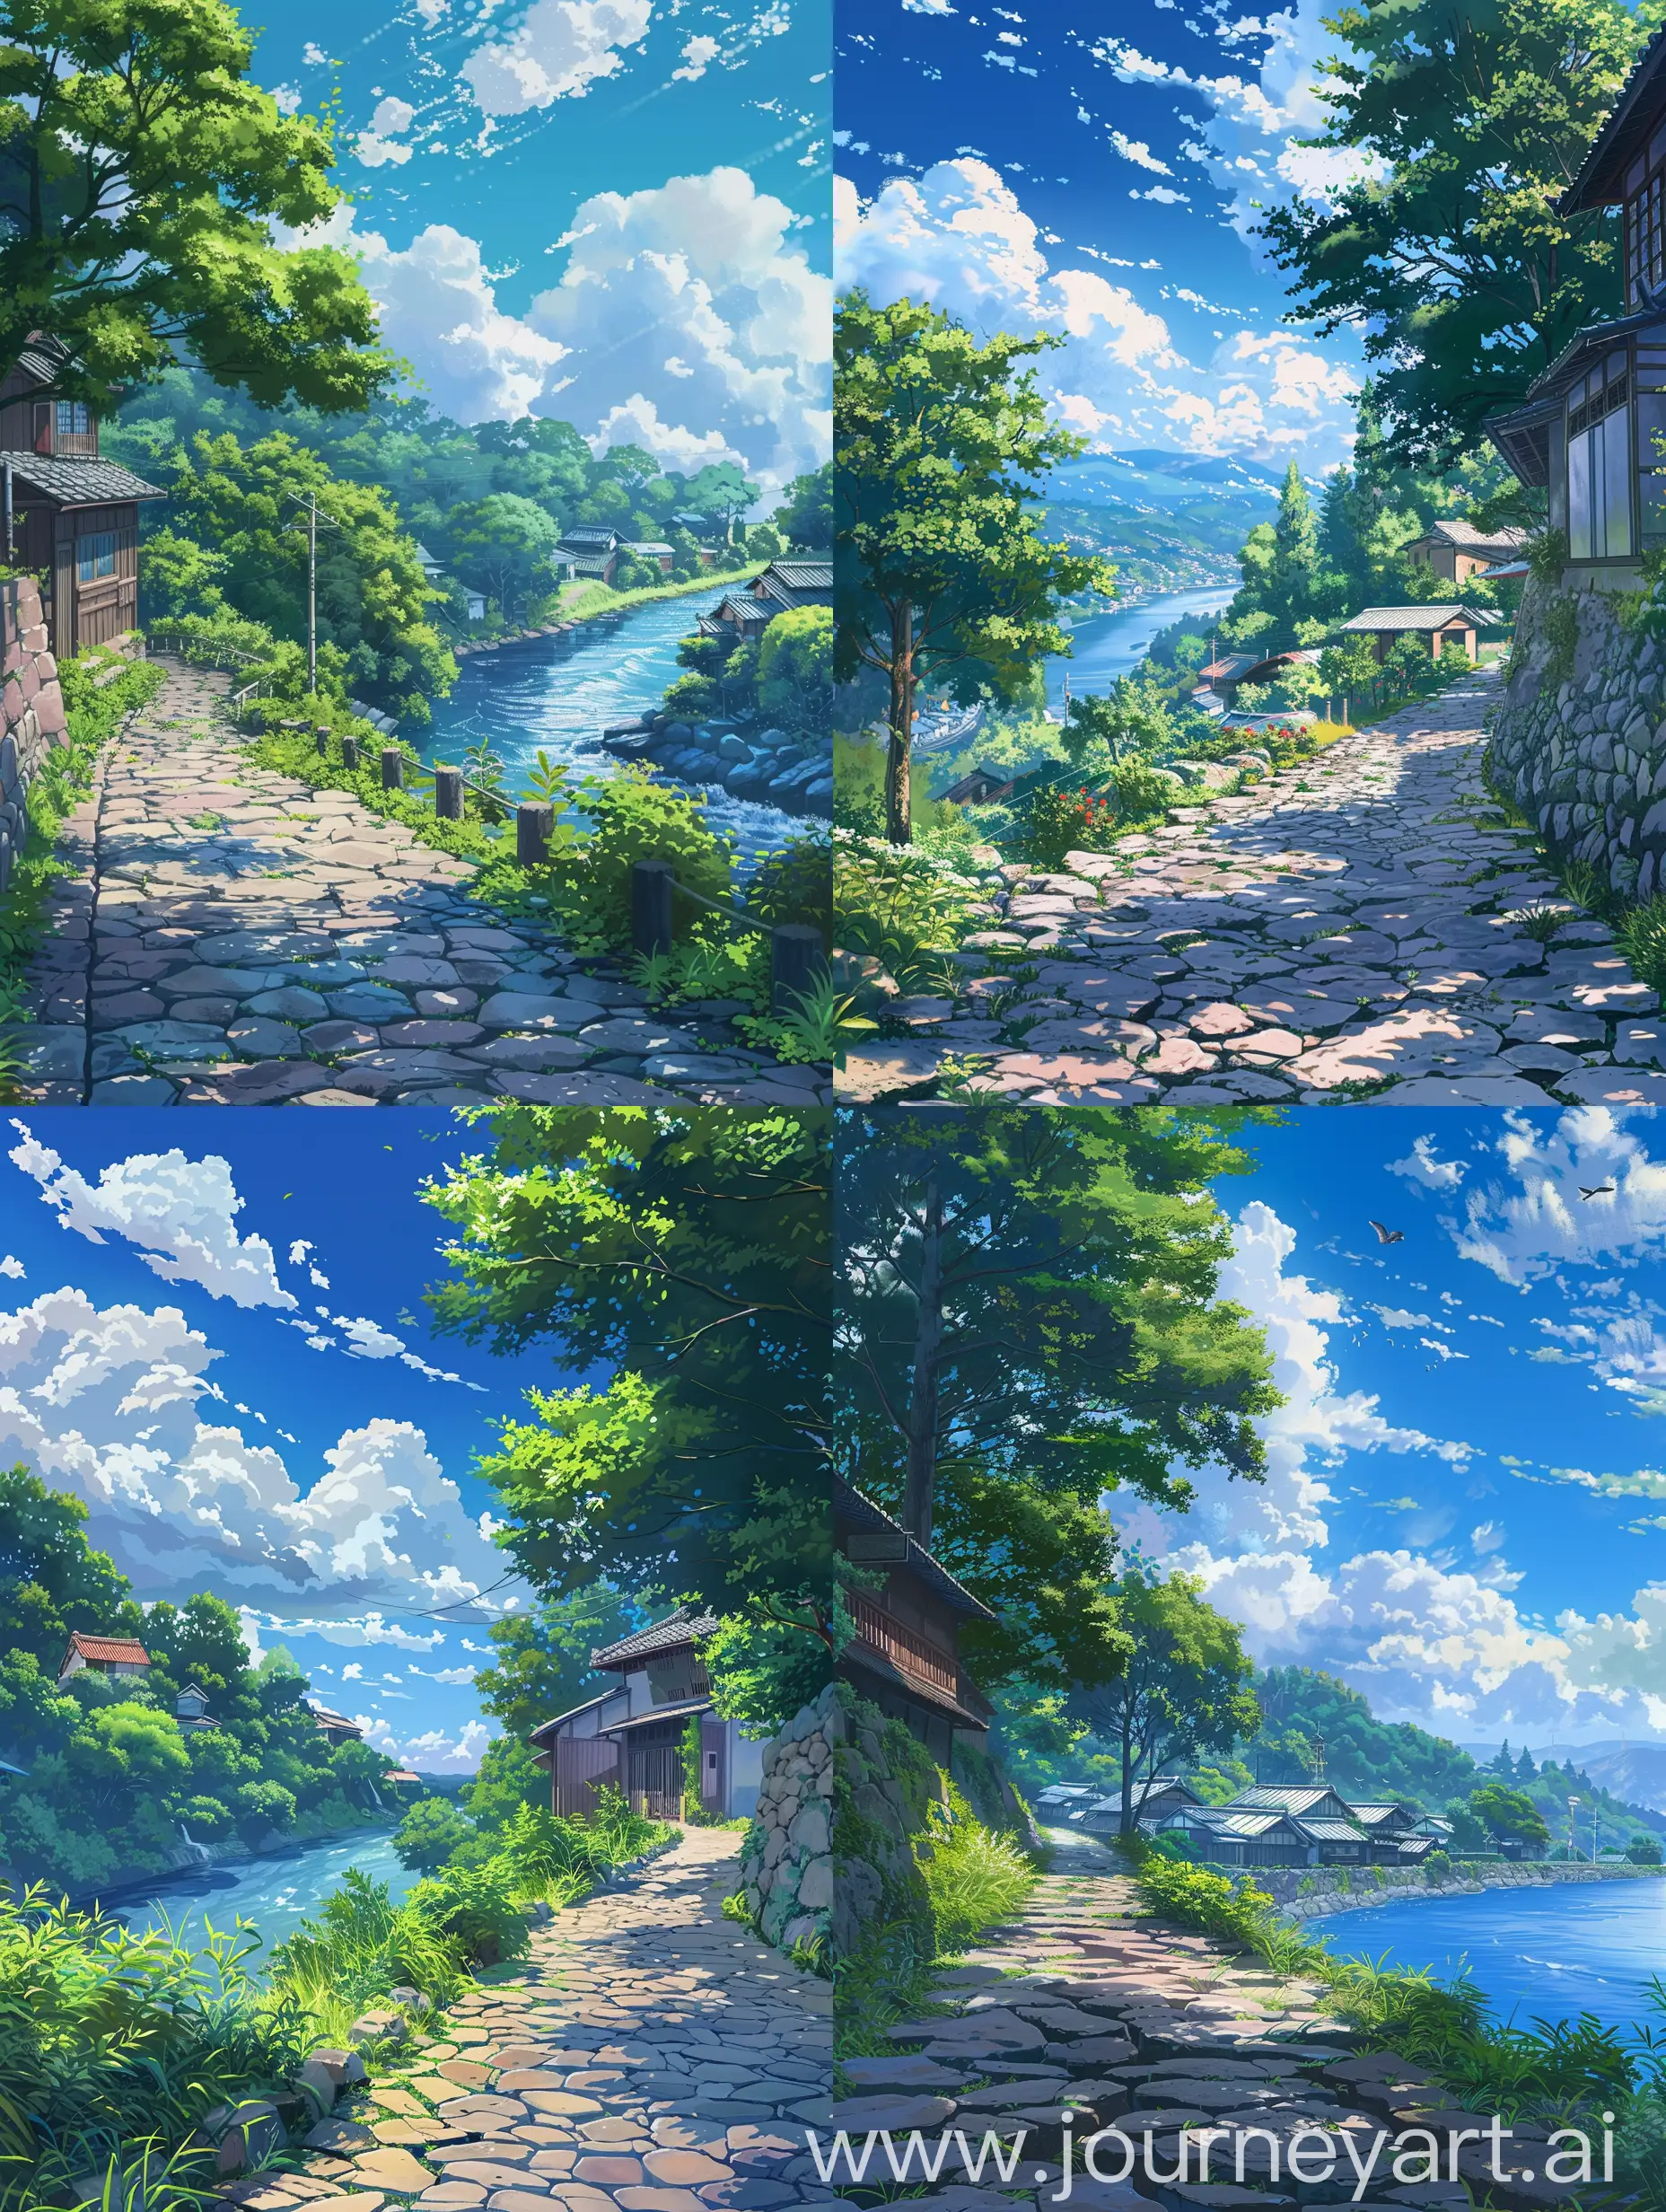 Beautiful anime style,Makoto Shinkai style and ghibli mix style,a beautiful path od stones,beautiful summers,beautiful blue sky,approaching the perfection,trees,windy,alongside a a river,some houses.
